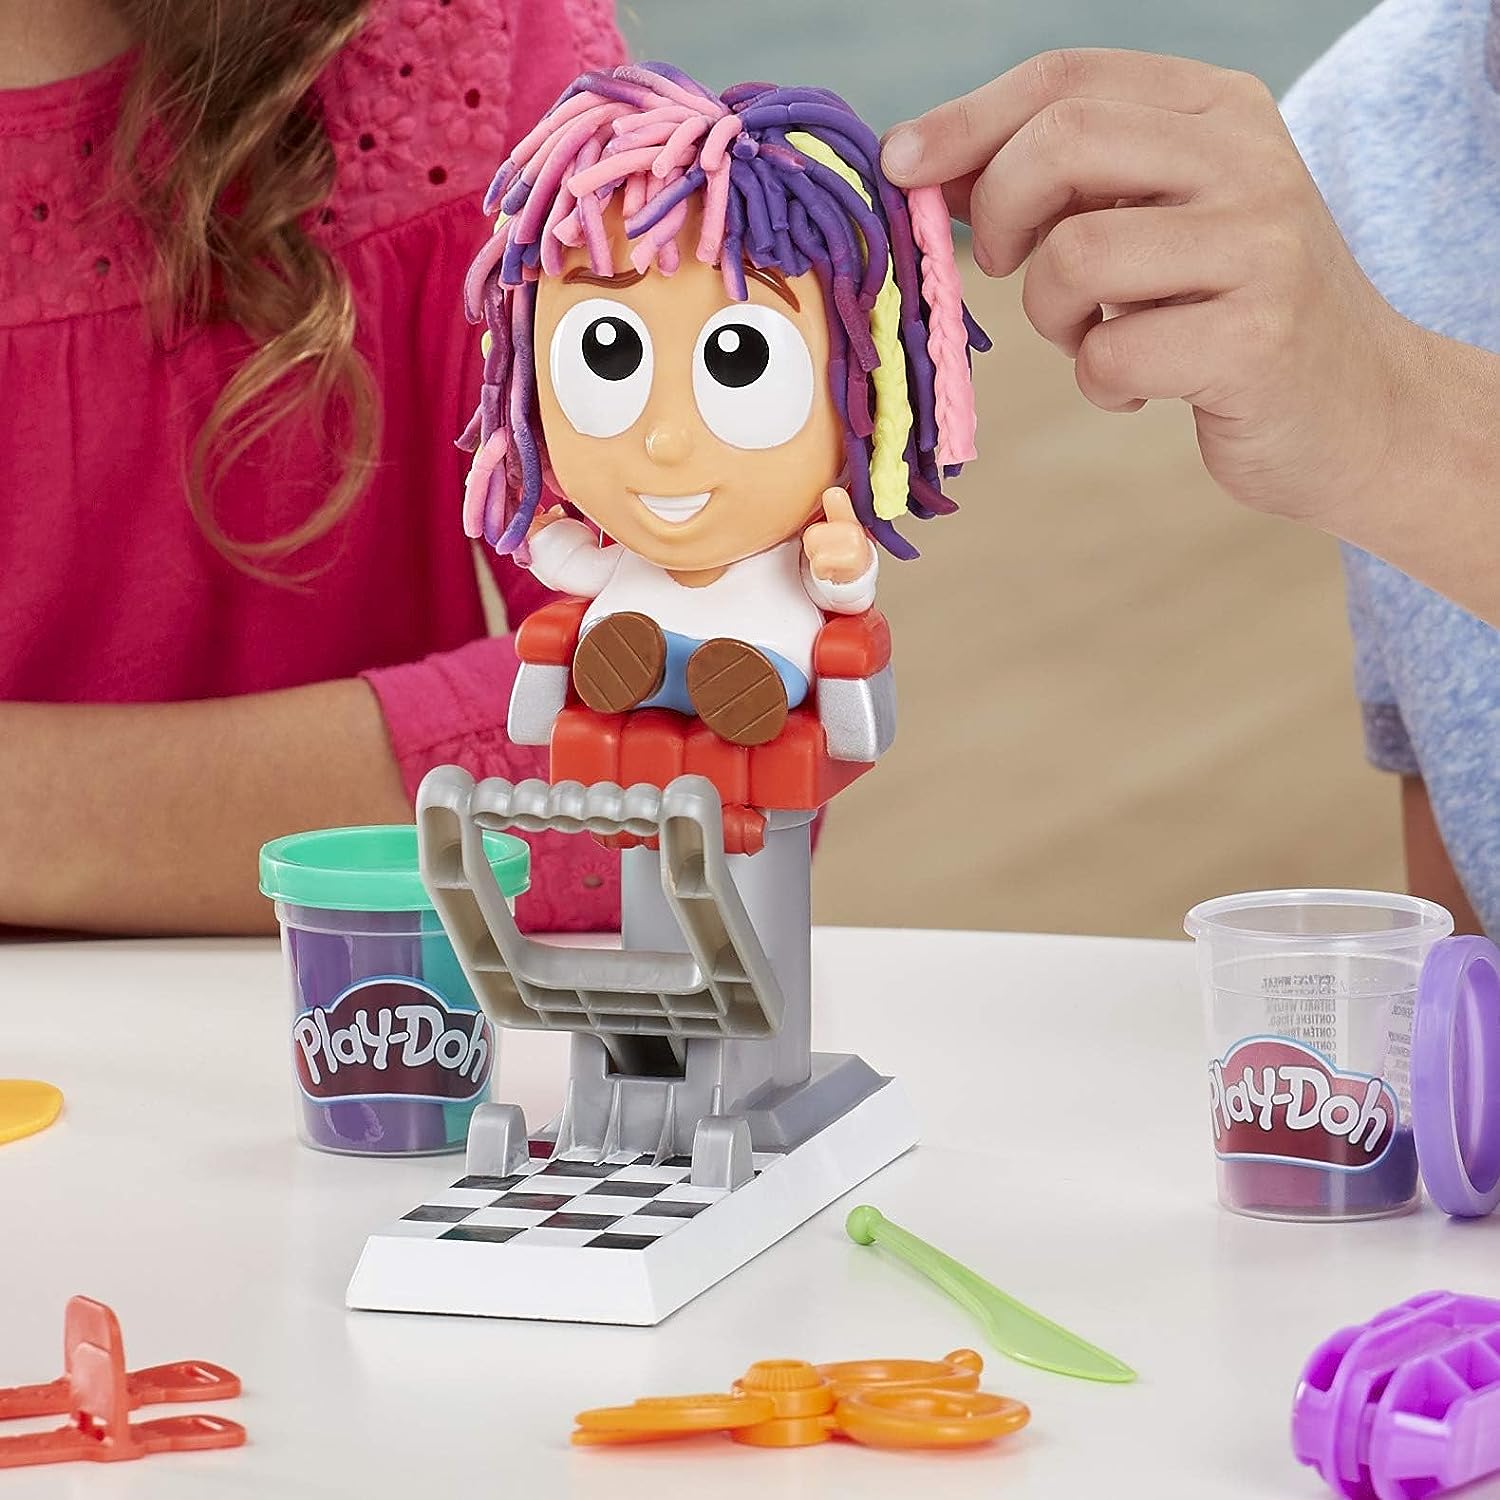 Play-Doh Crazy Cuts Stylist Hair Salon Pretend Play Toy